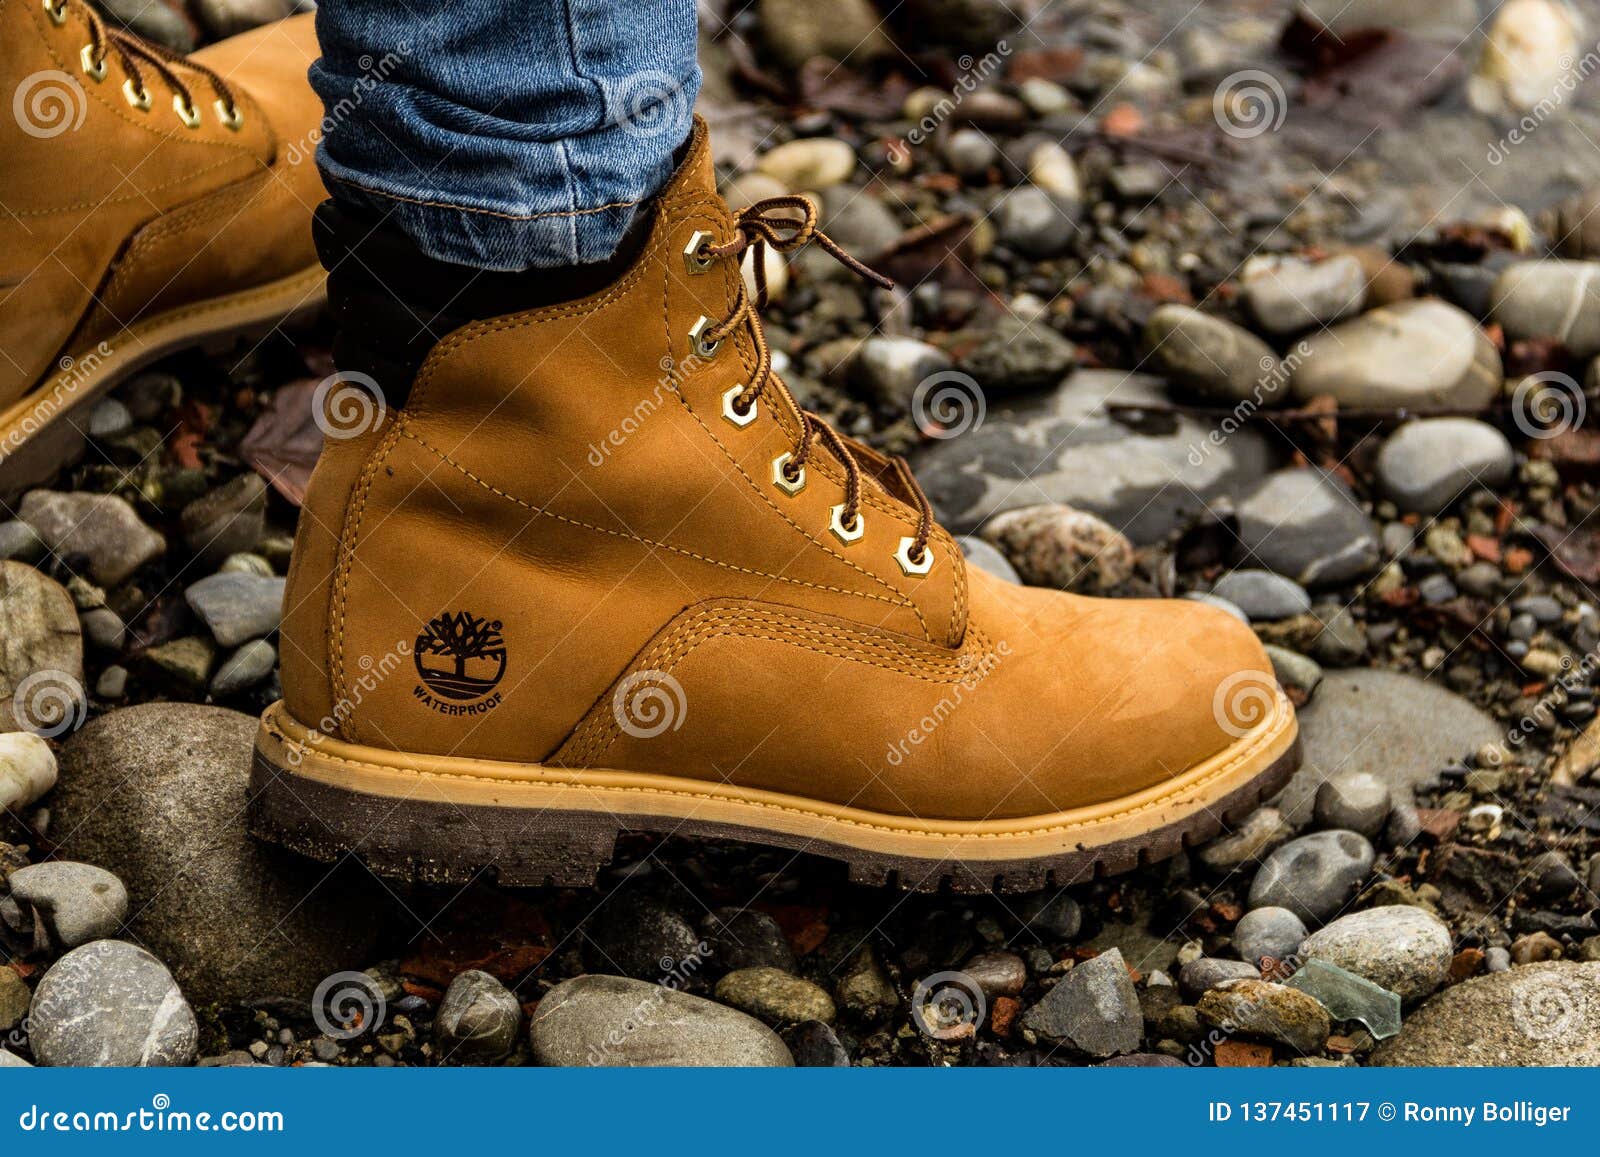 Bern, Switzerland,9.12.18: almost Ready. Close Up of Stylish Yellow Boot on  Female Leg Editorial Photography - Image of black, background: 137451117